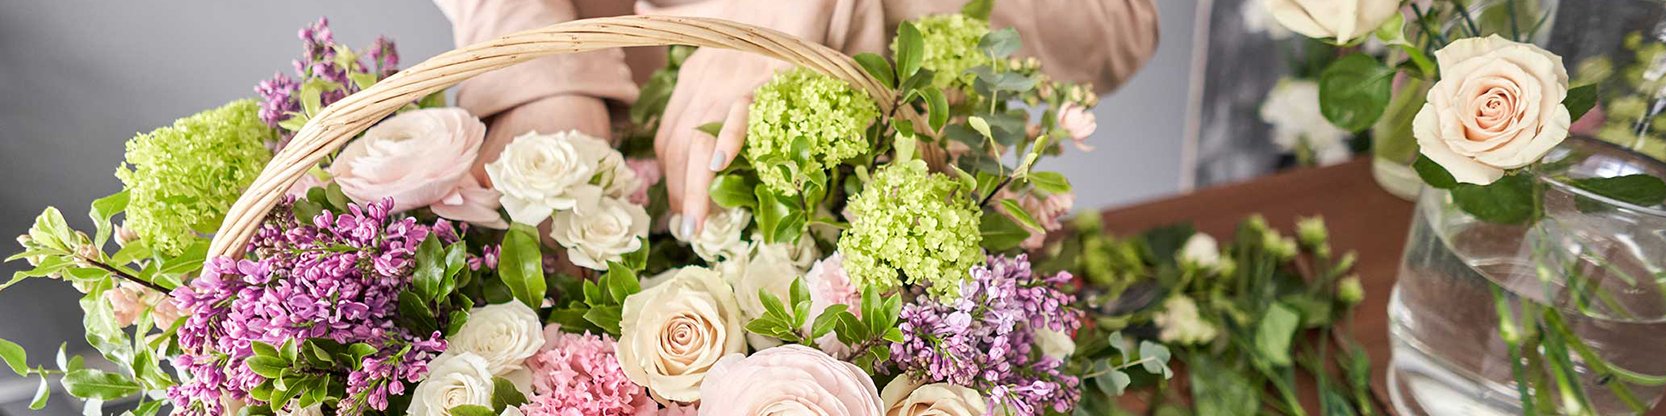 Blomsterværkstedet TINE - Din blomsterbutik i Nyborg - blomster online